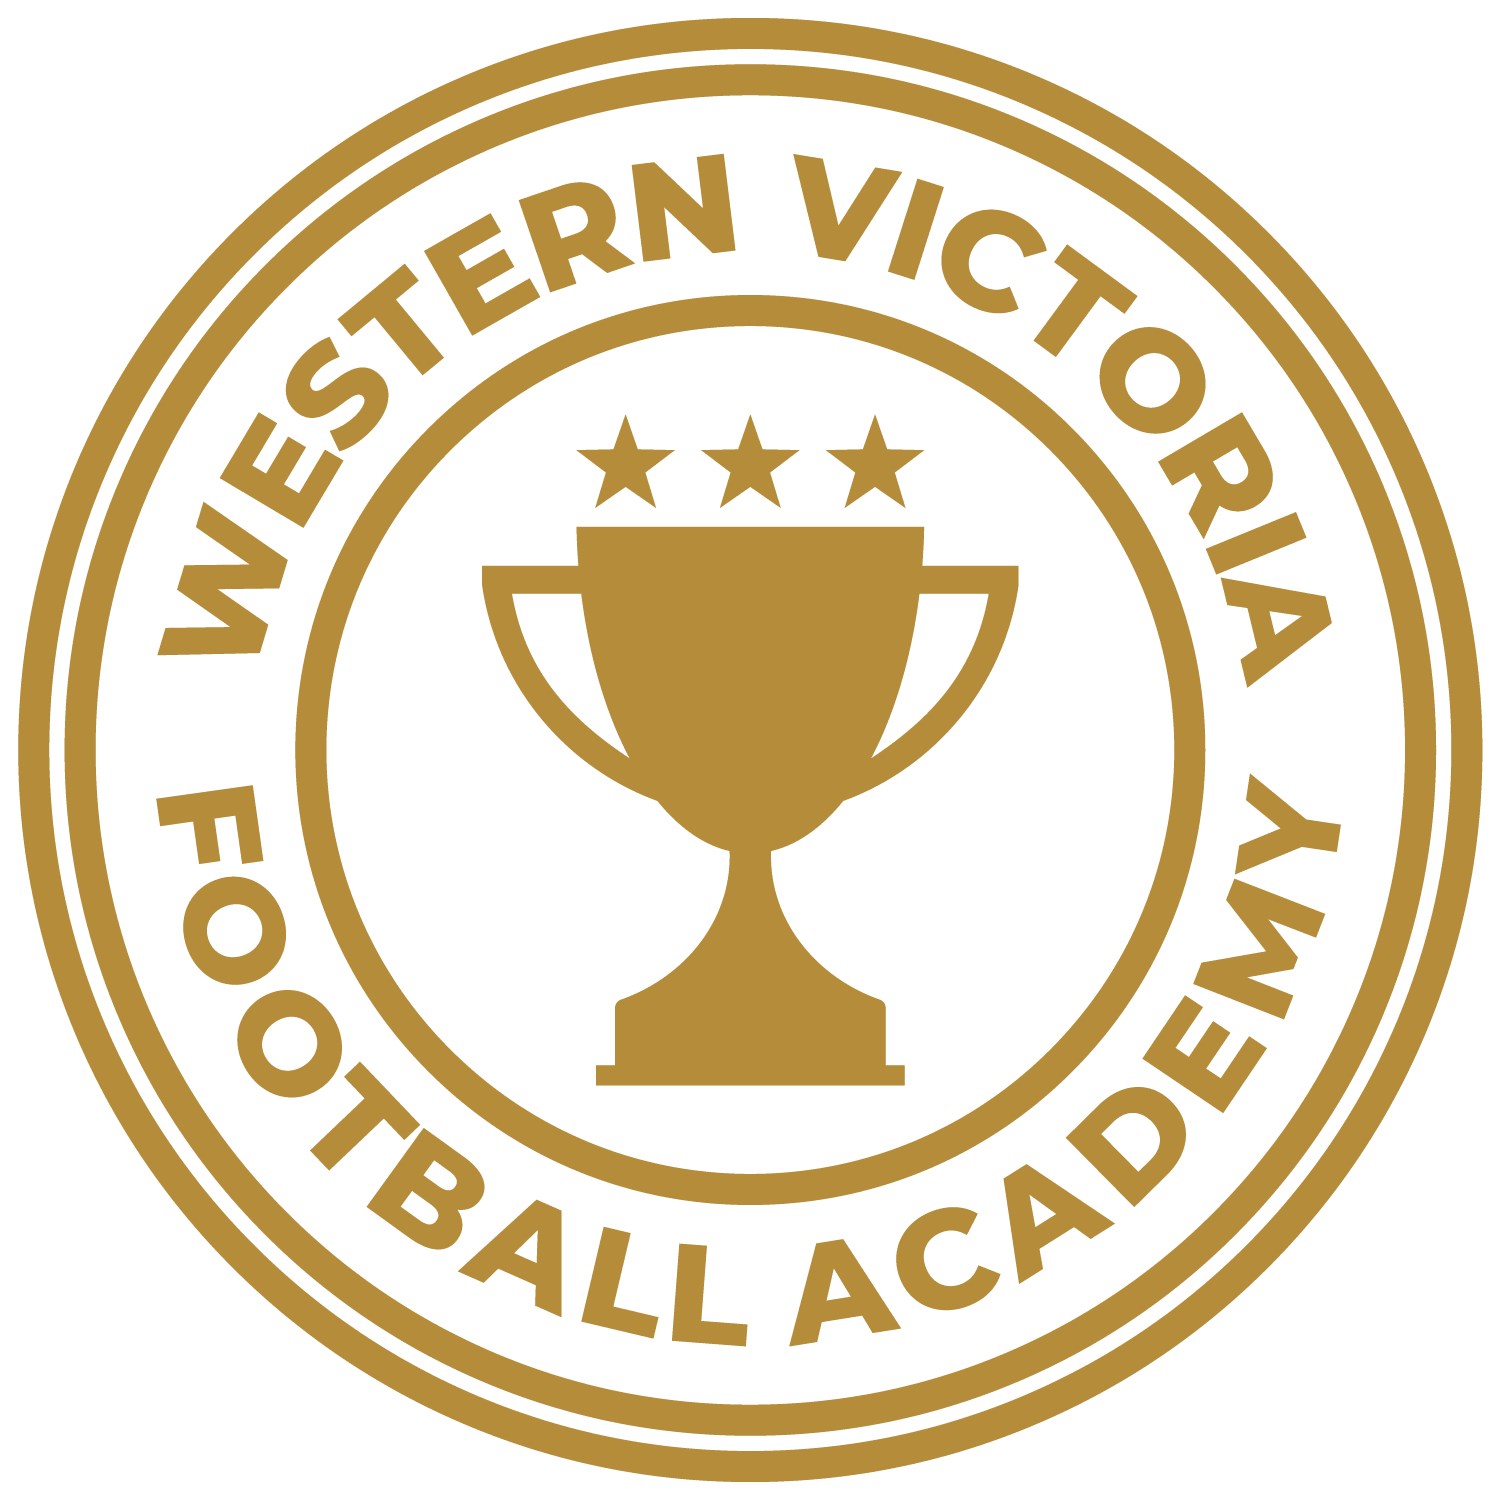 Western Victoria Football Academy